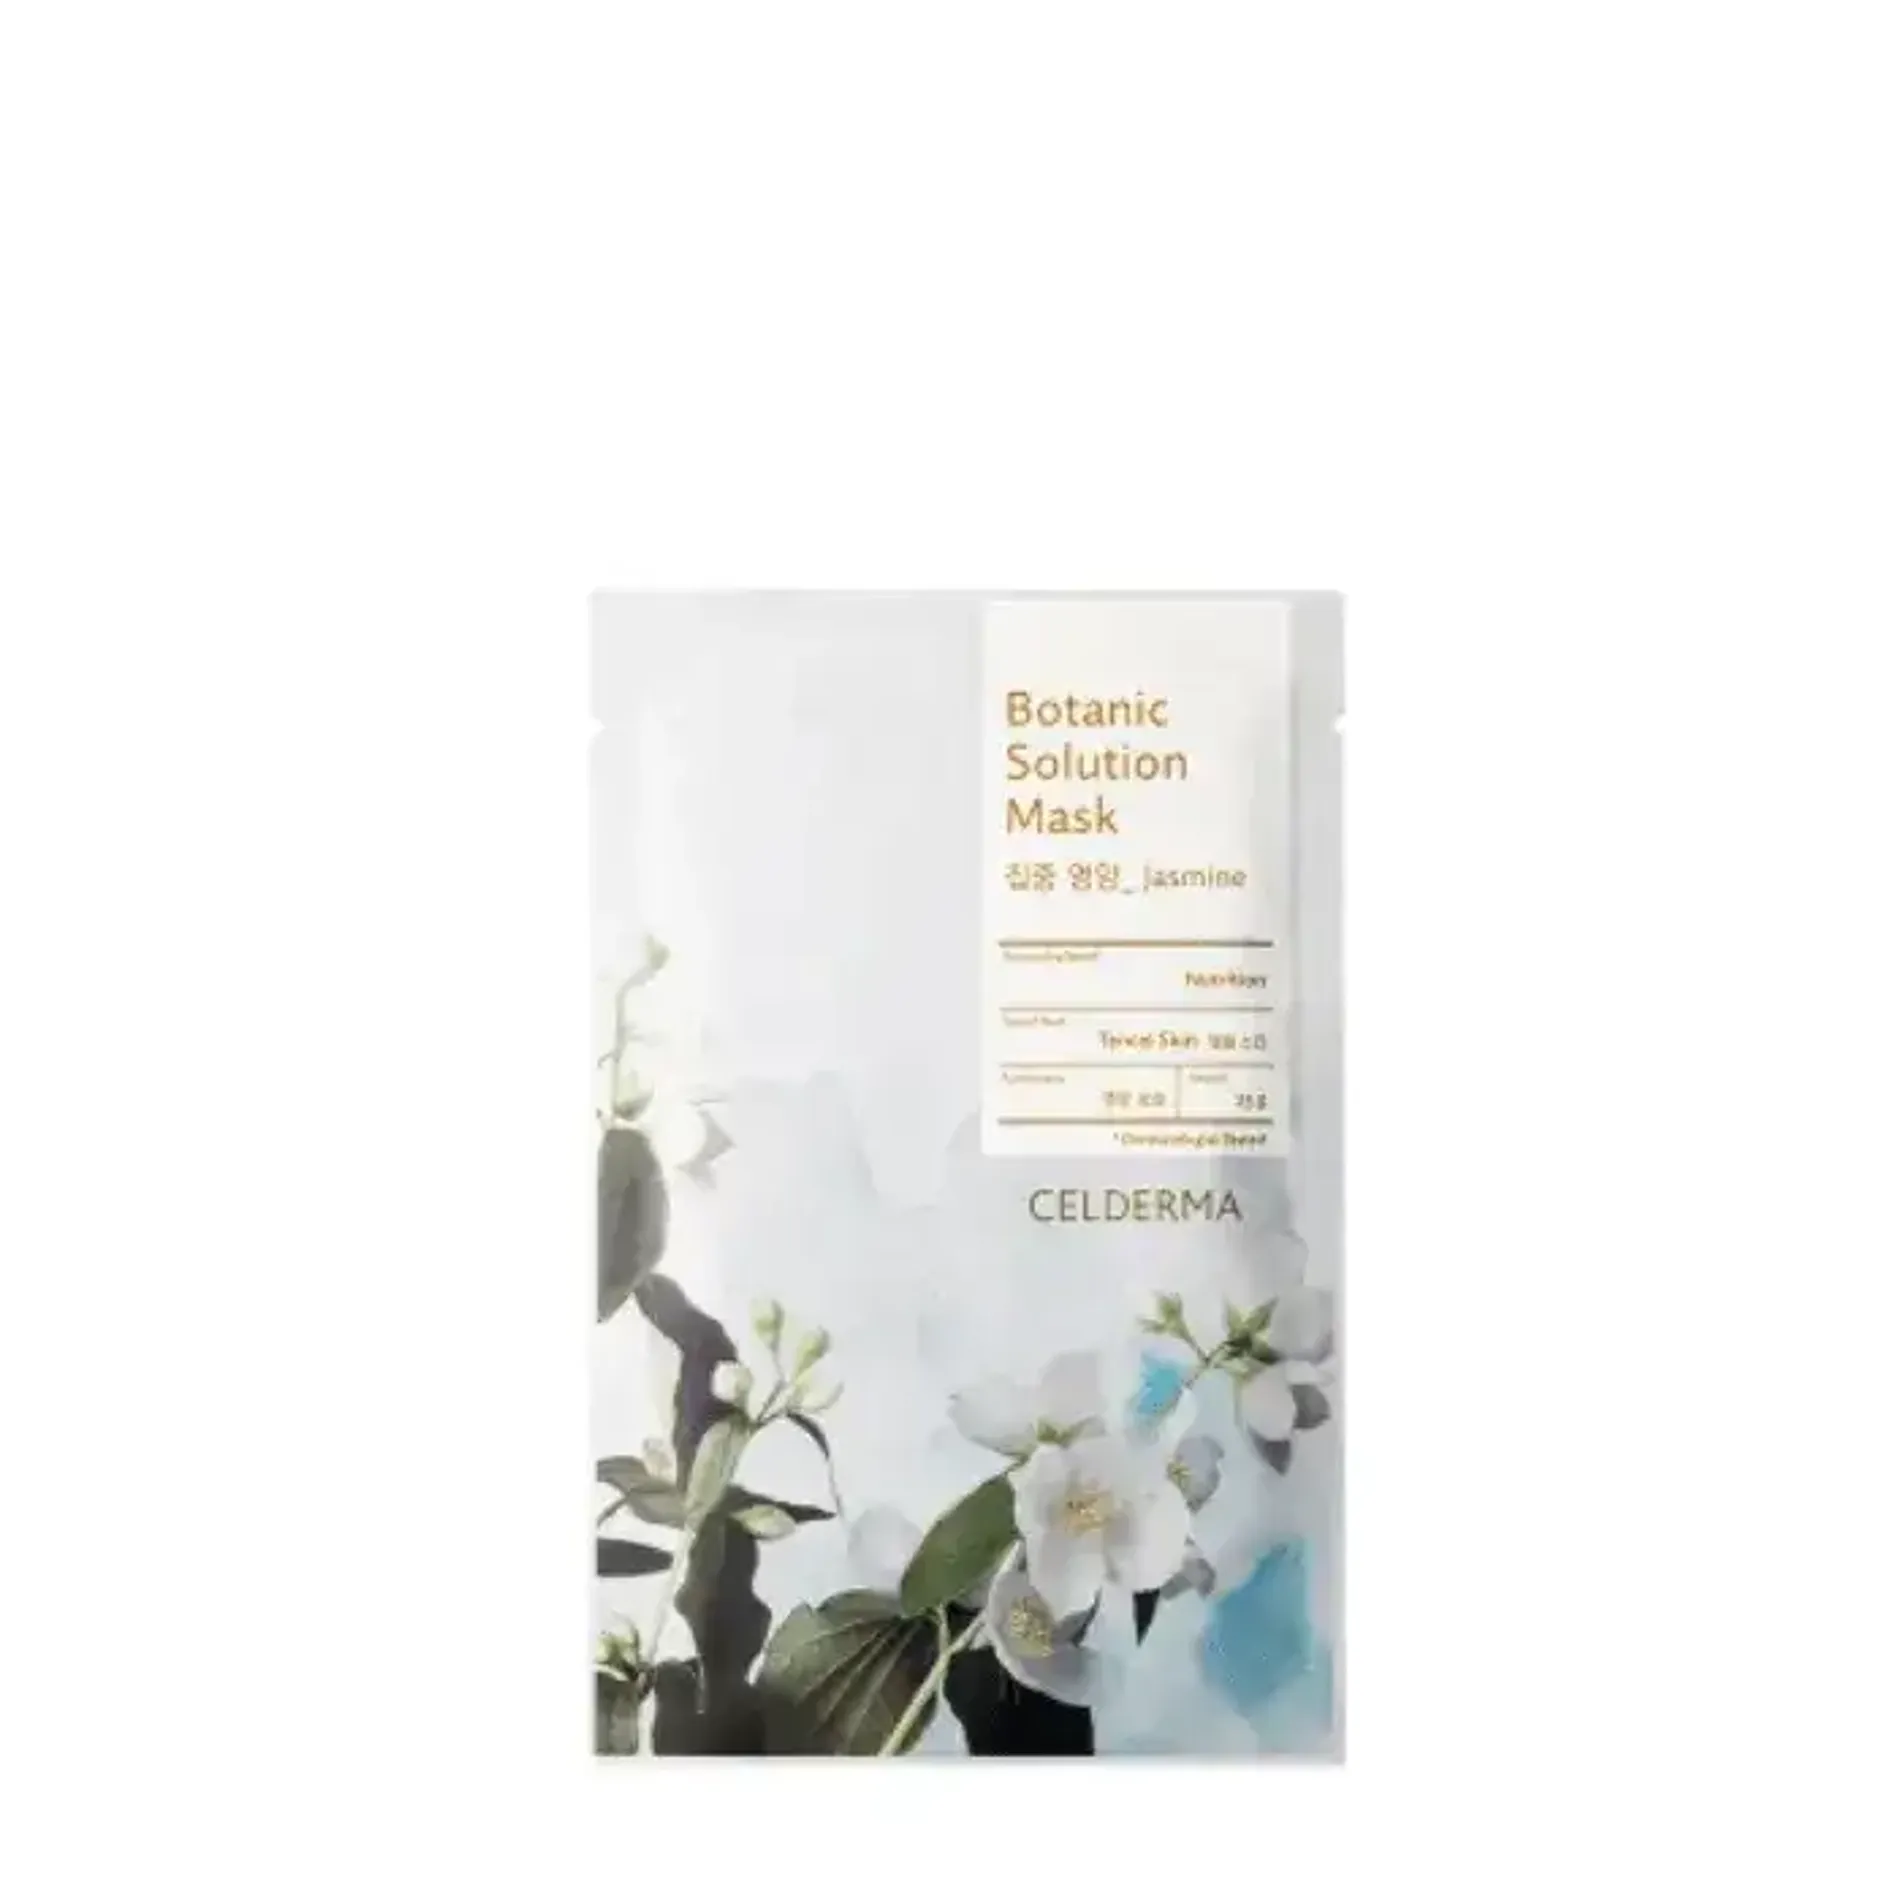 mat-na-giay-duong-am-celderma-botanic-solution-mask-jasmine-25g-1